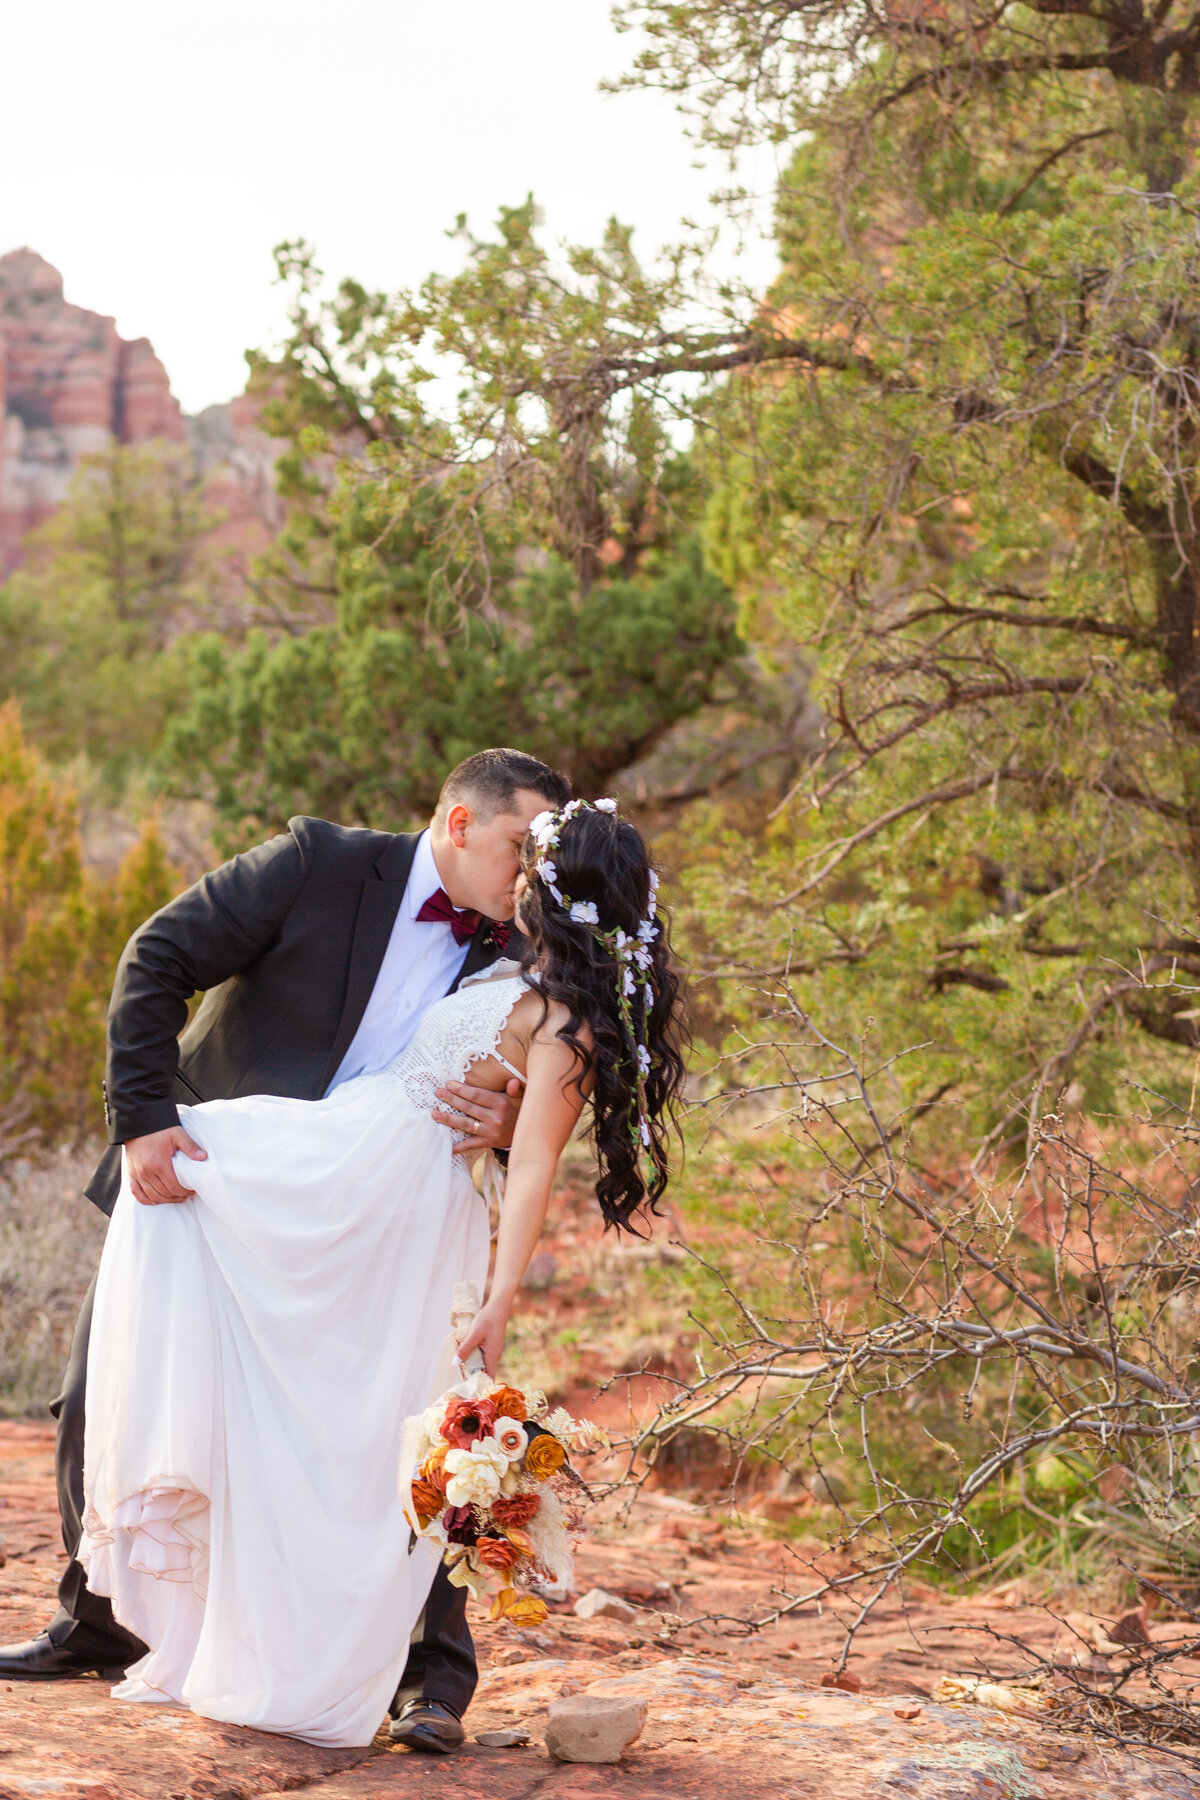 Wedding Anniversary Portrait Photography - Sedona, Arizona - Bell Rock - Bayley Jordan Photography